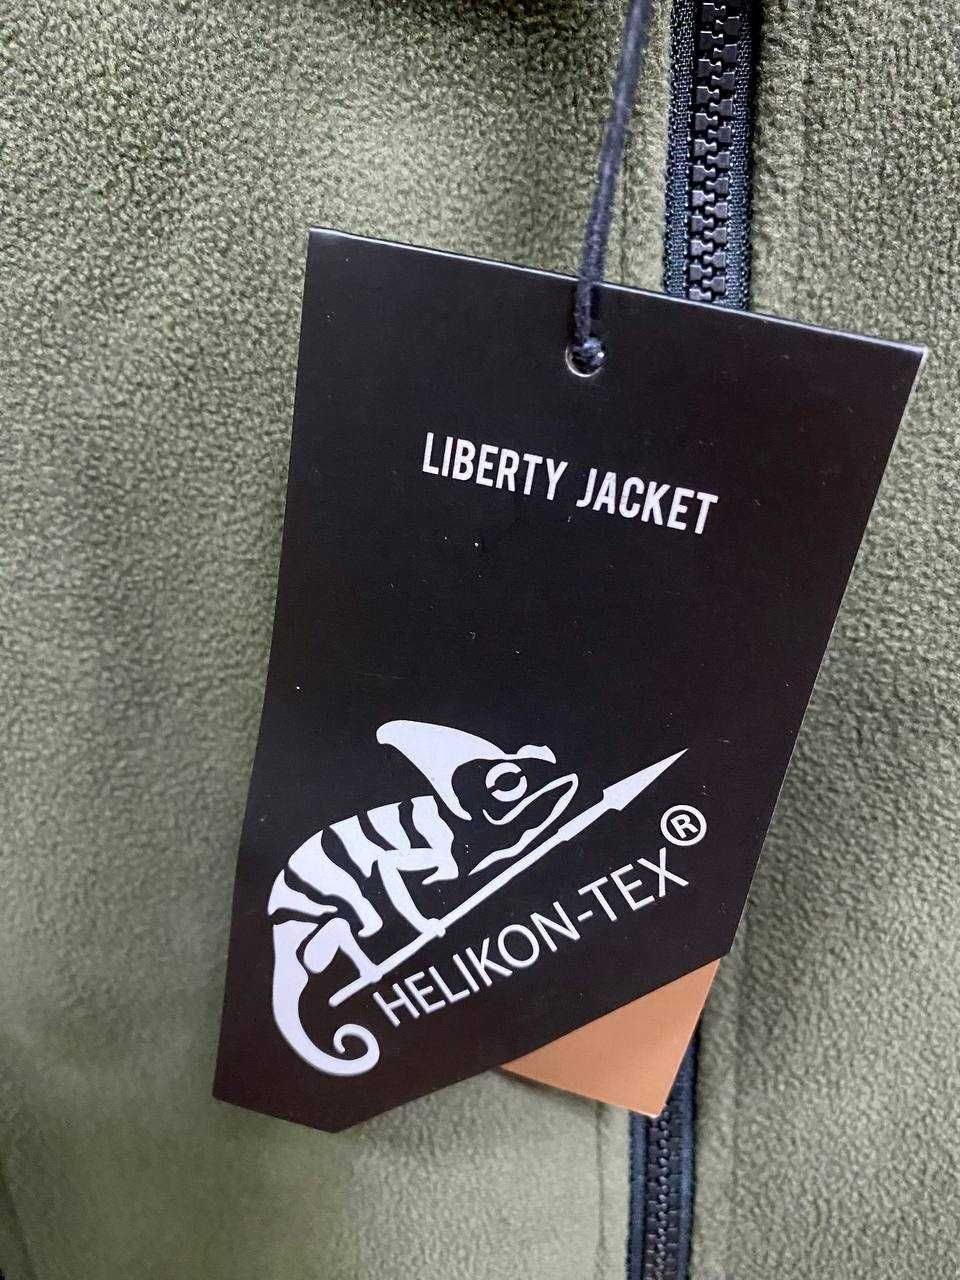 Куртка Helikon-Tex LIBERTY - Double Fleece, Olive green